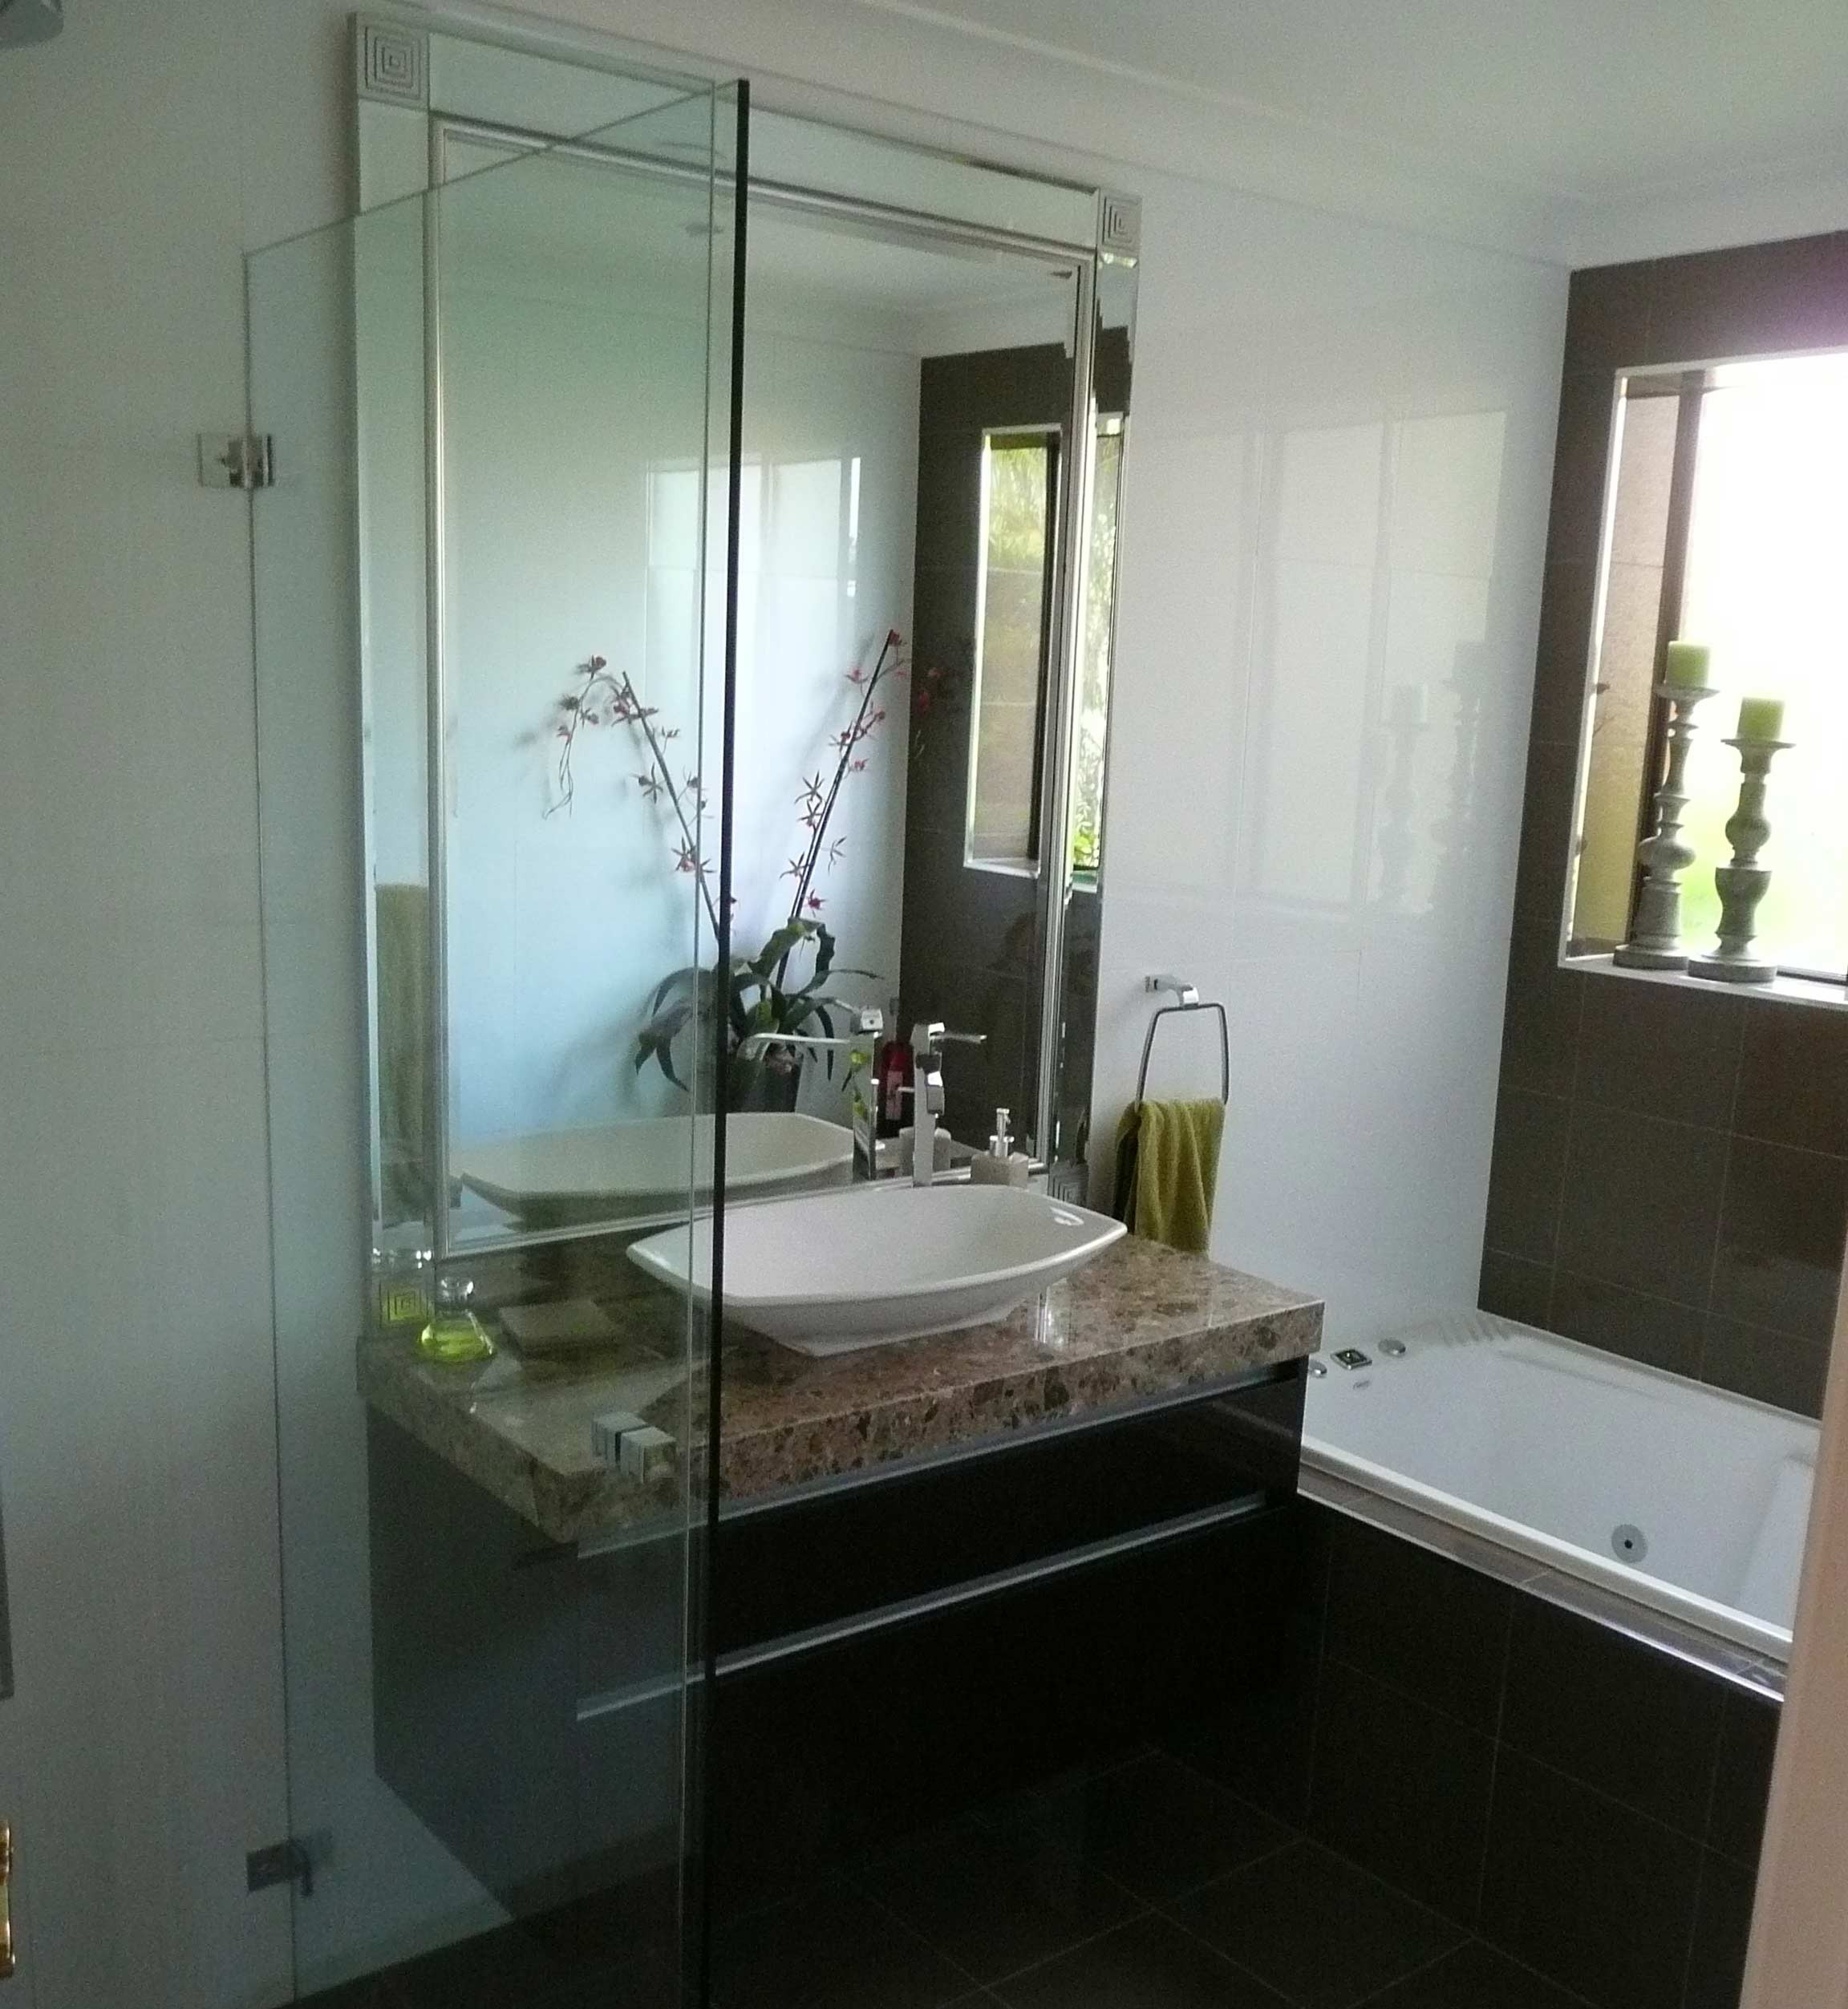 Bathroom Design Sydney
 Small Bathroom Renovations Designs Sydney Best Vanities